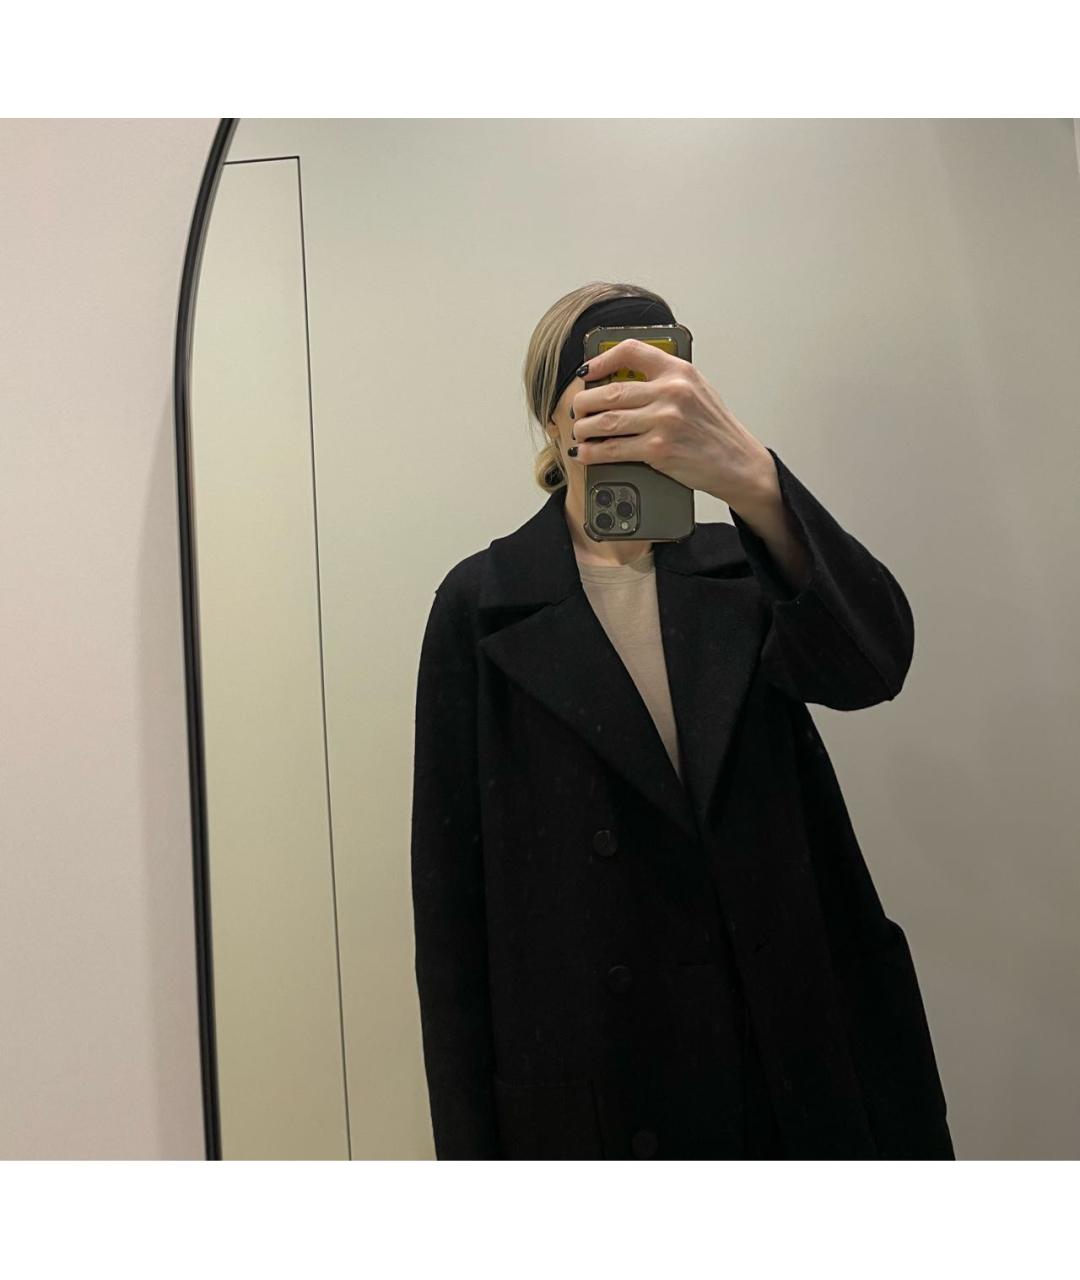 HARRIS WHARF LONDON Черное шерстяное пальто, фото 4